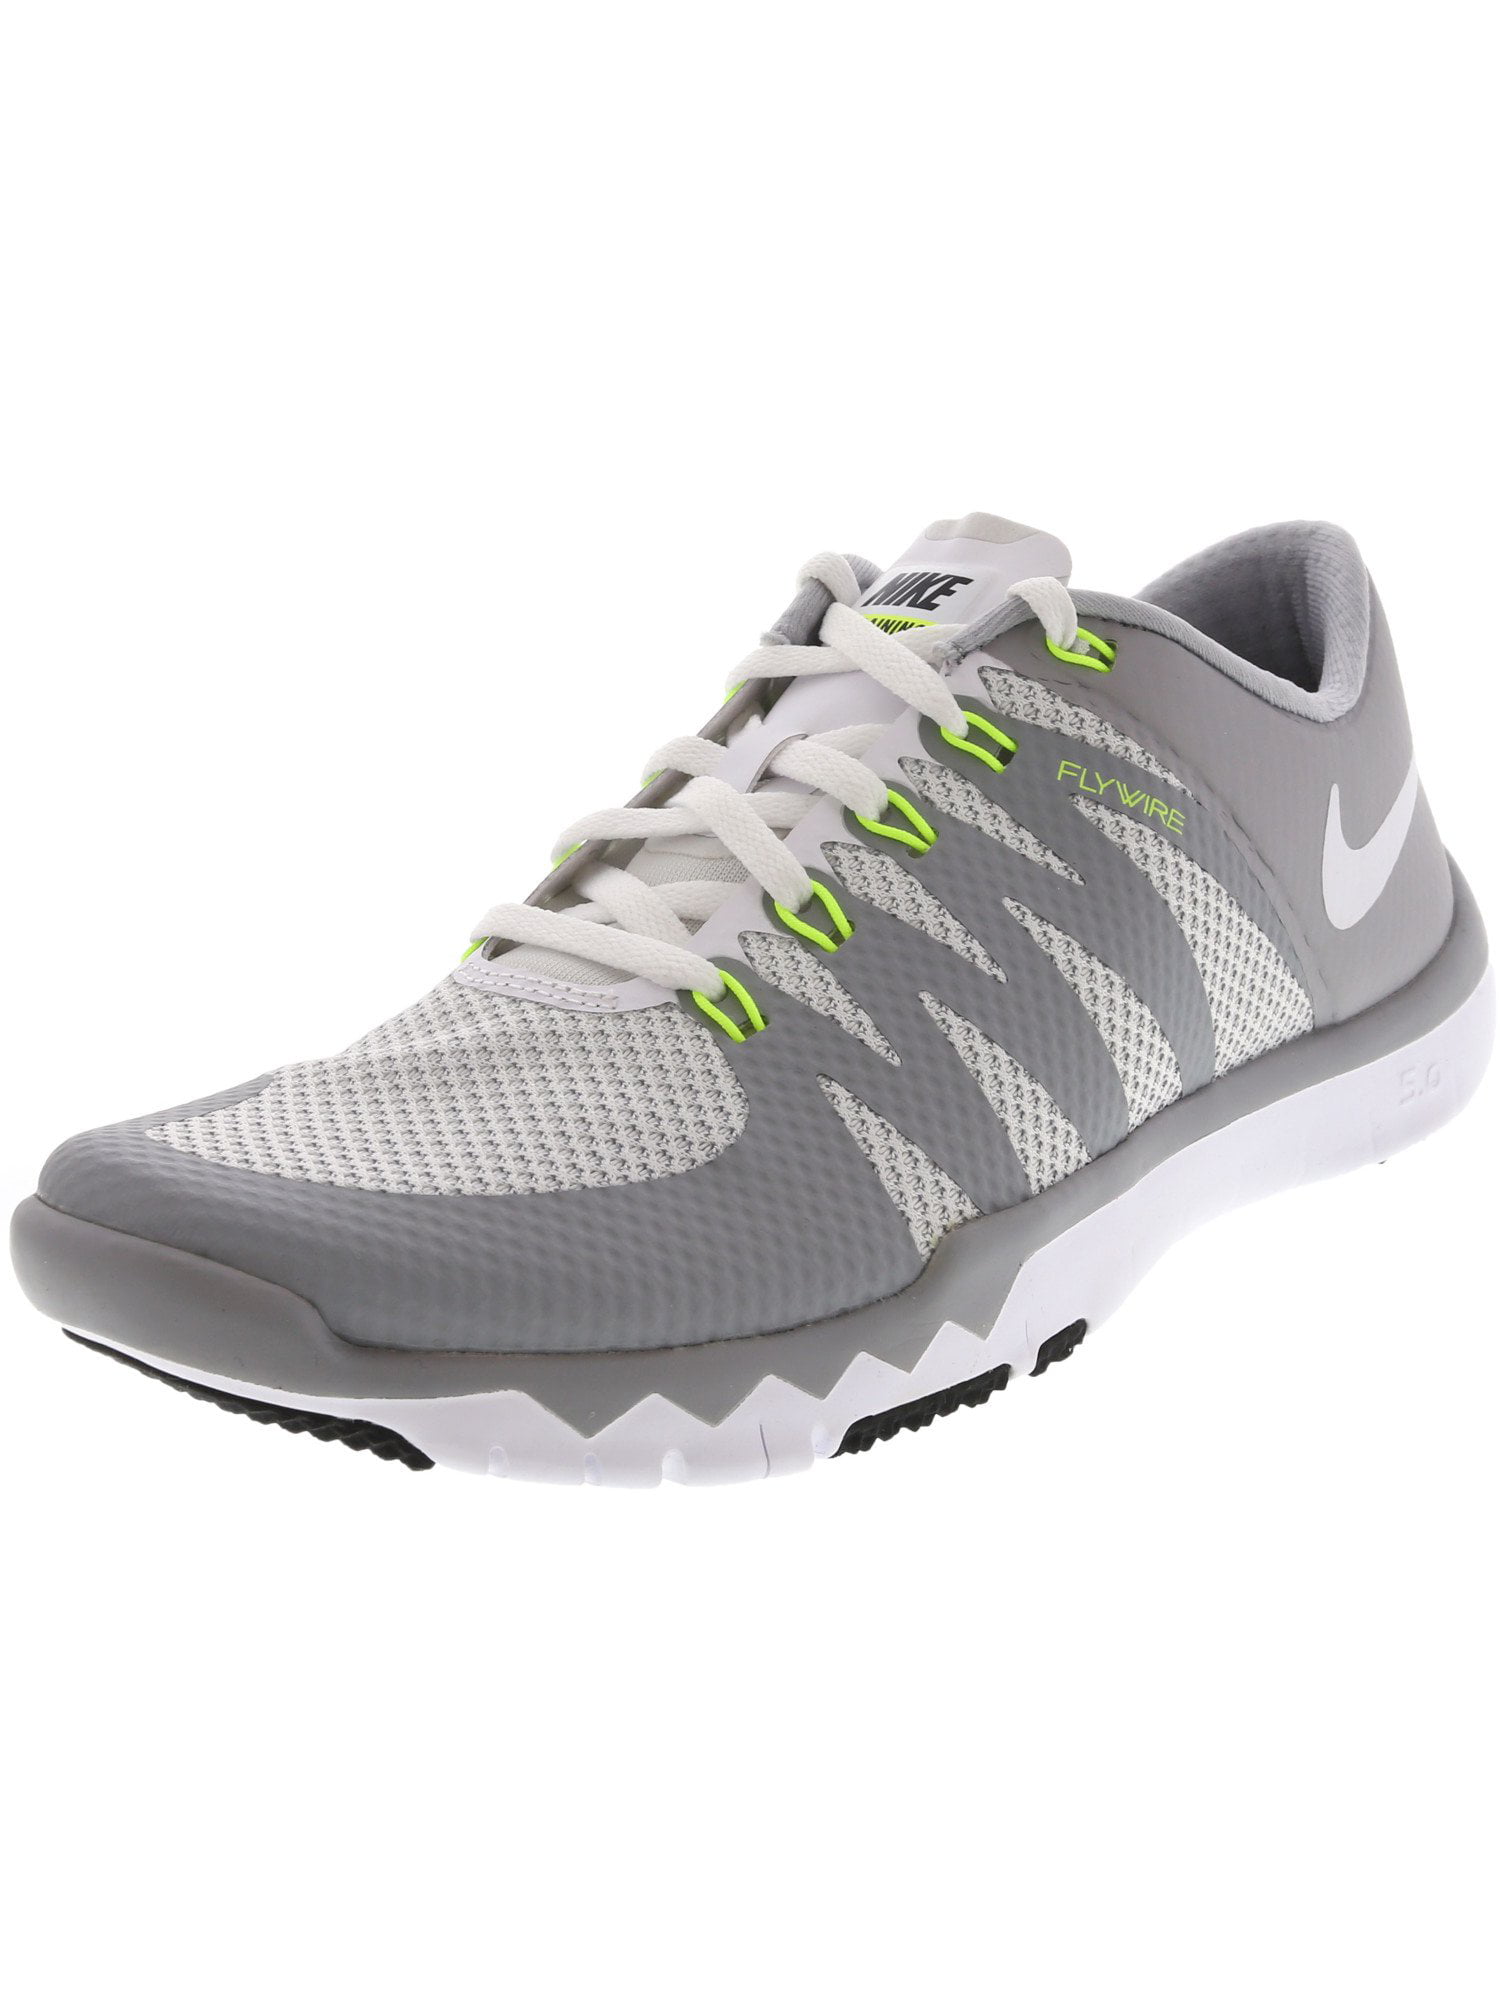 Nike Men's Trainer V6 / - Wolf Grey Ankle-High Cross Shoe 11M - Walmart.com